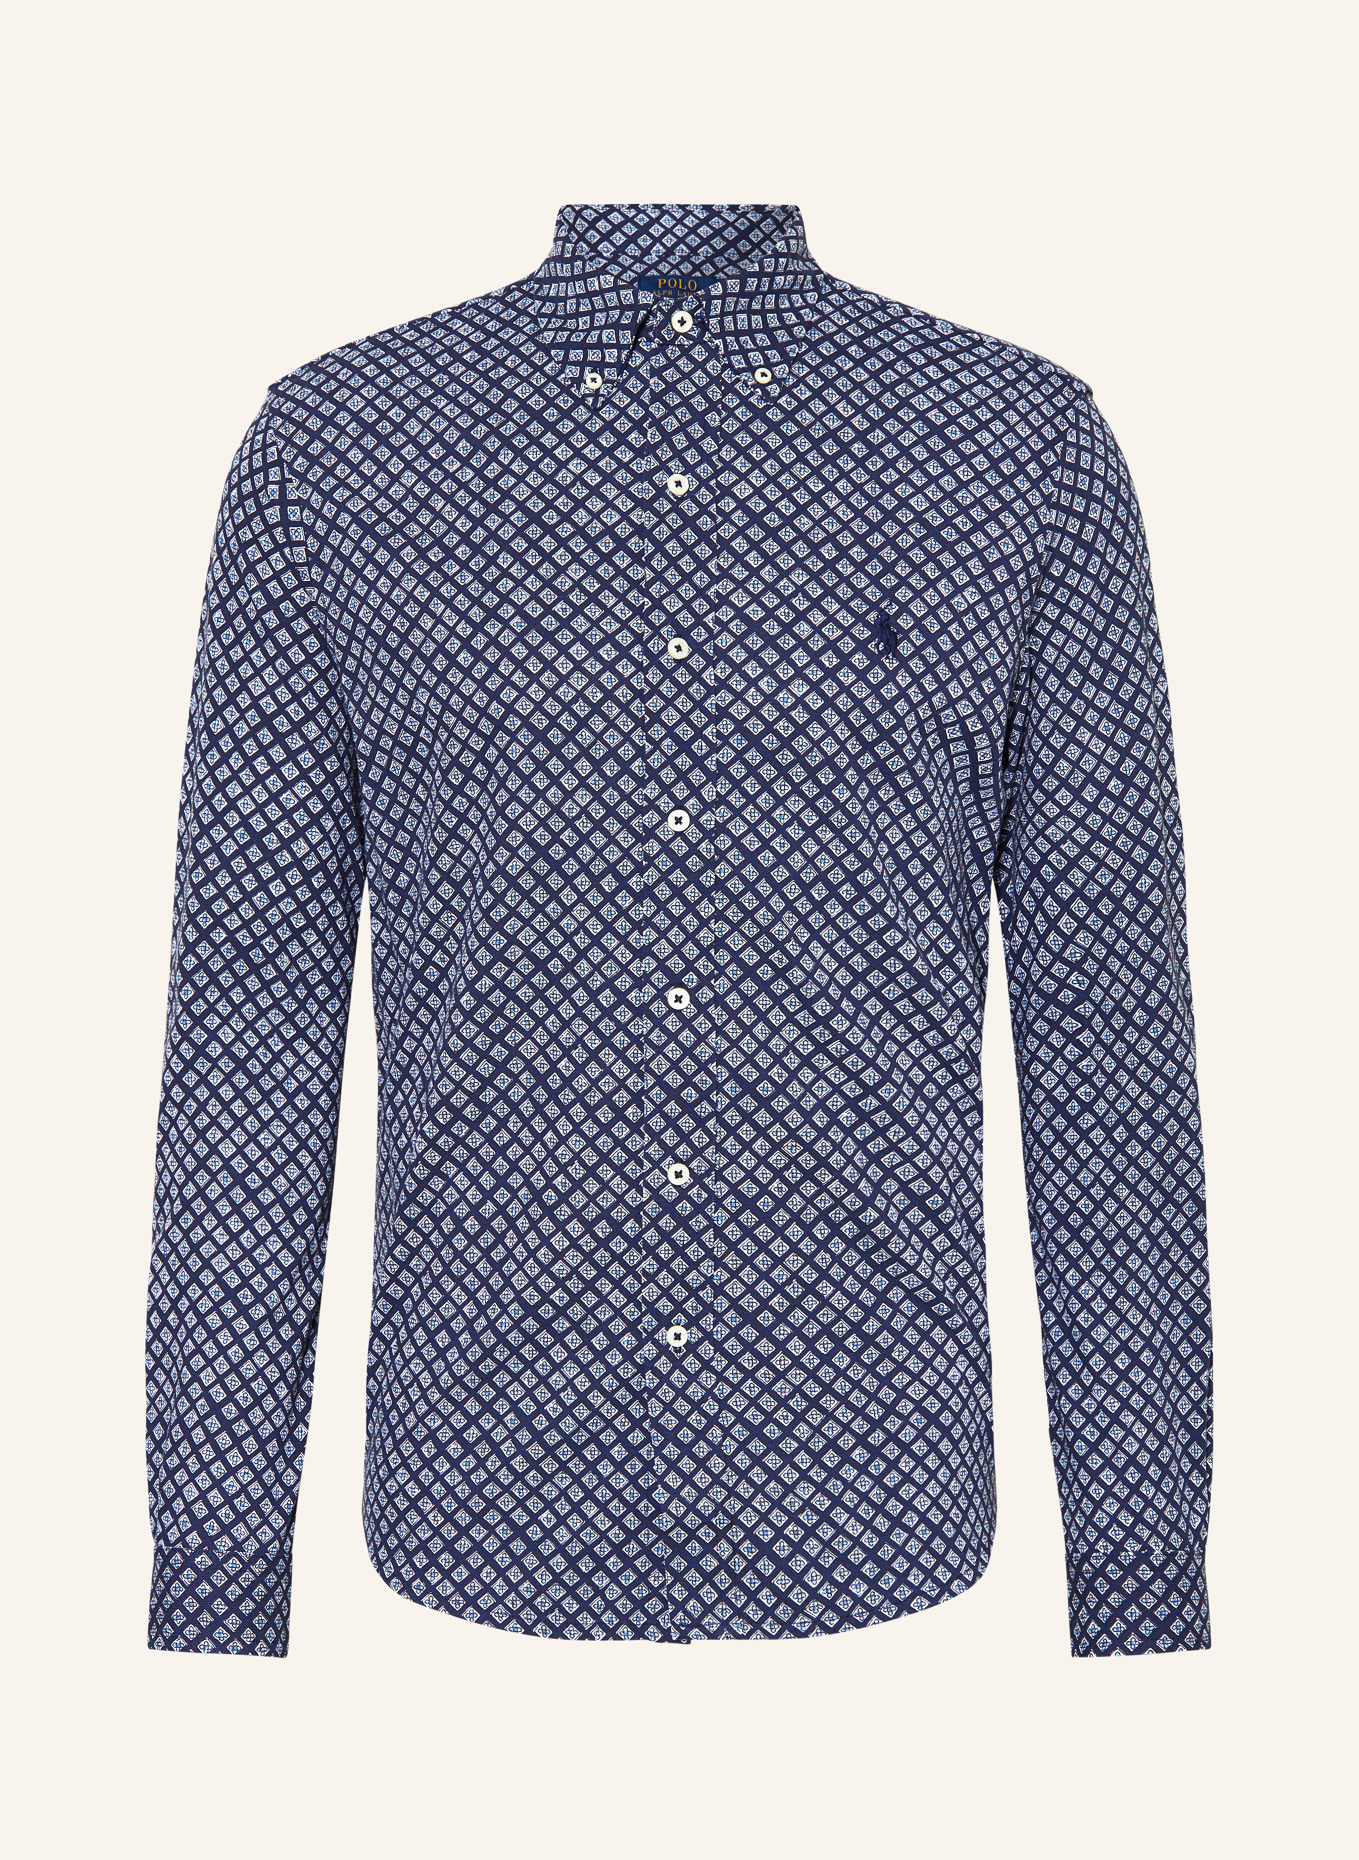 POLO RALPH LAUREN Hemd Comfort Fit, Farbe: DUNKELBLAU/ HELLBLAU/ WEISS (Bild 1)